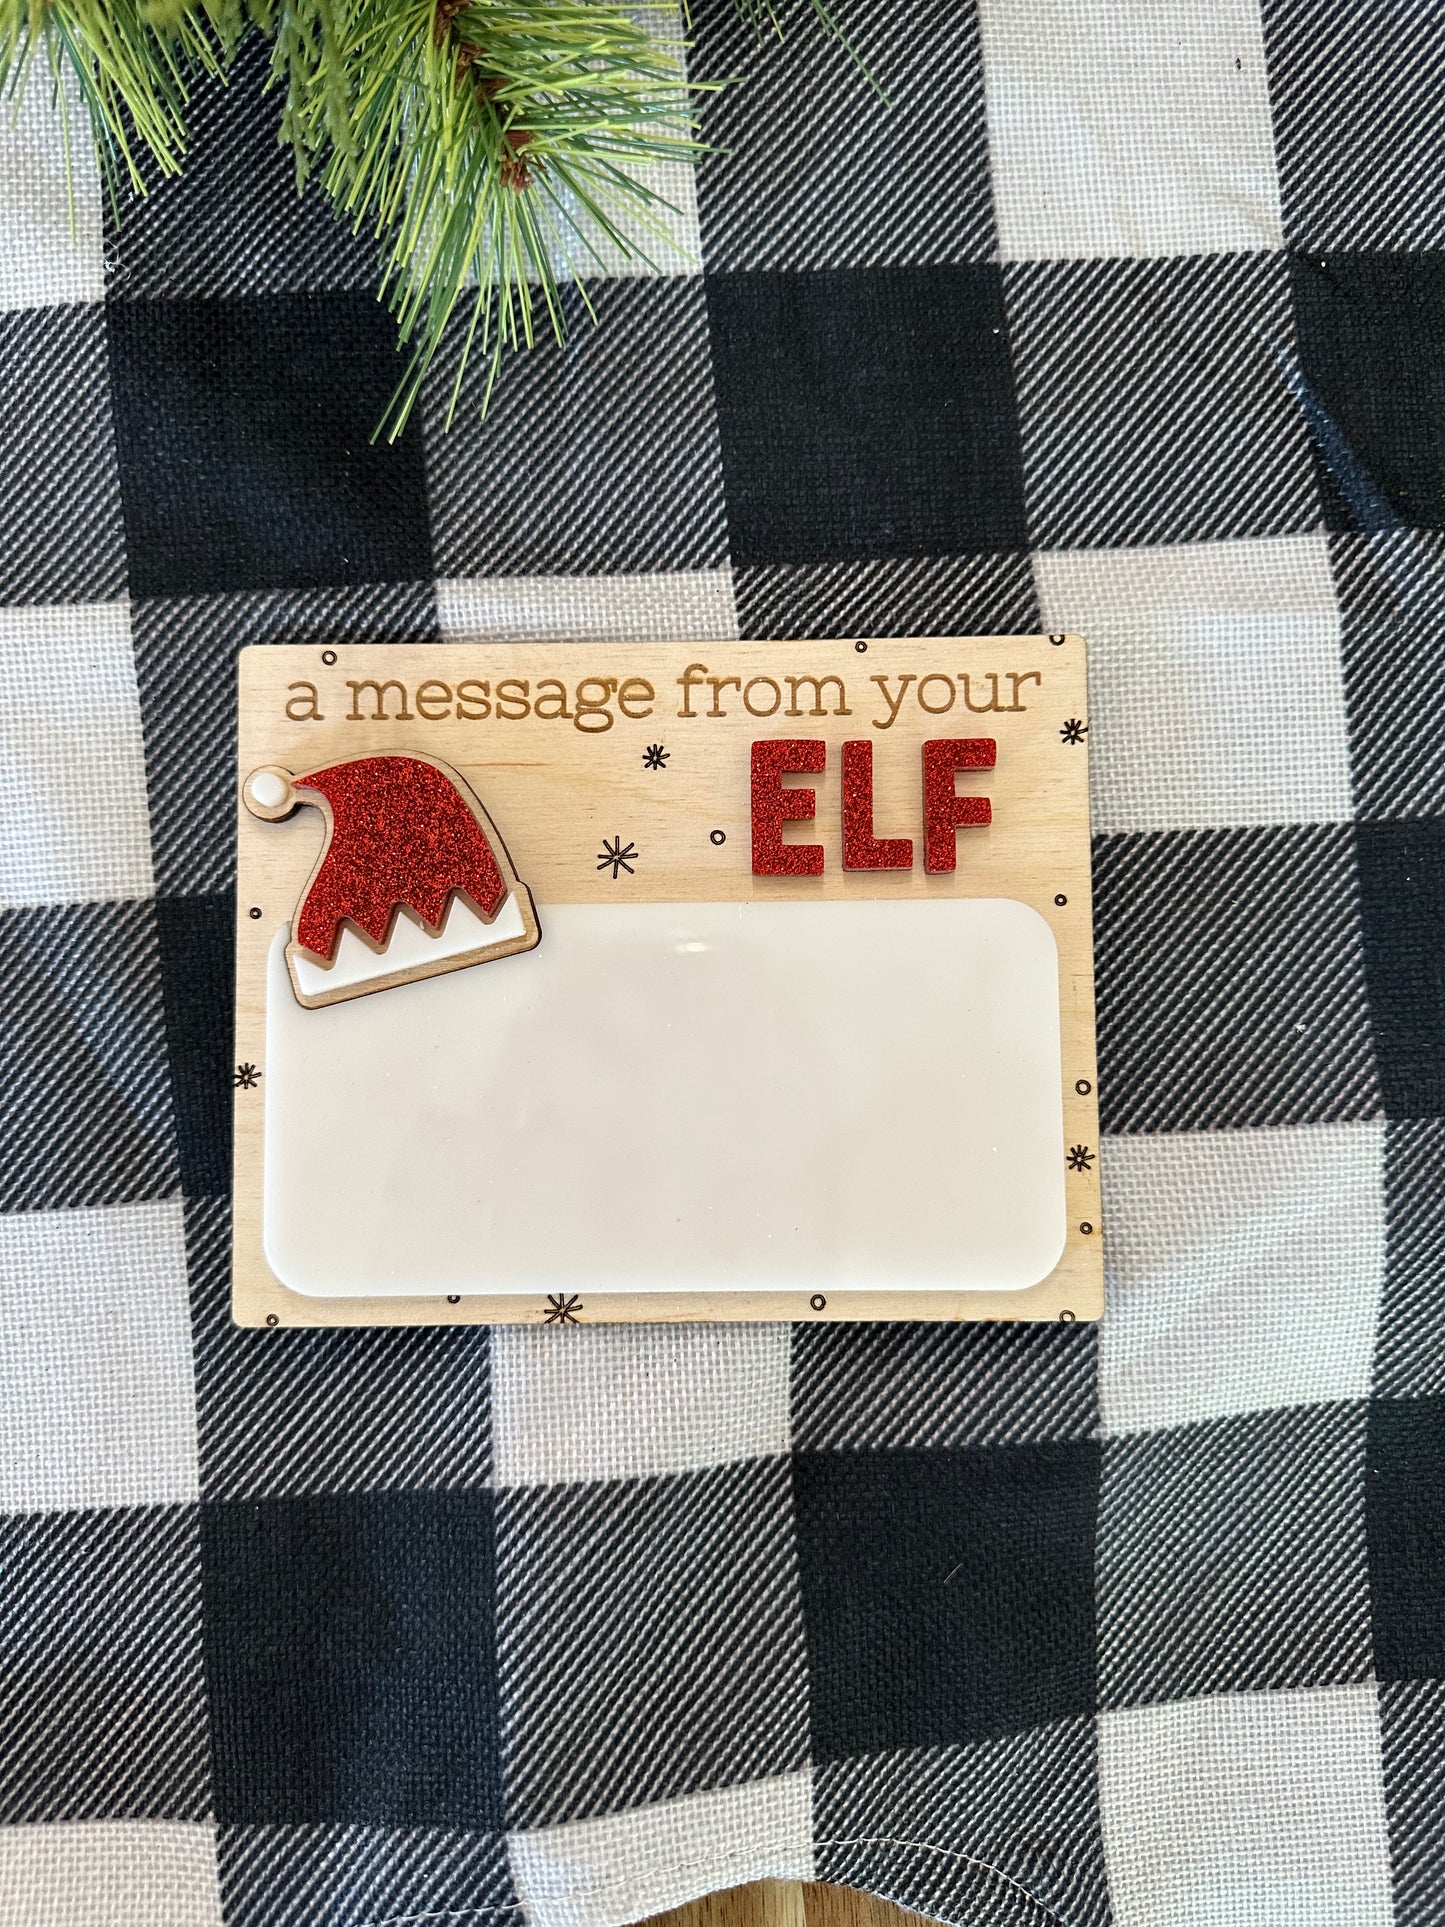 Elf on the shelf dry erase message board